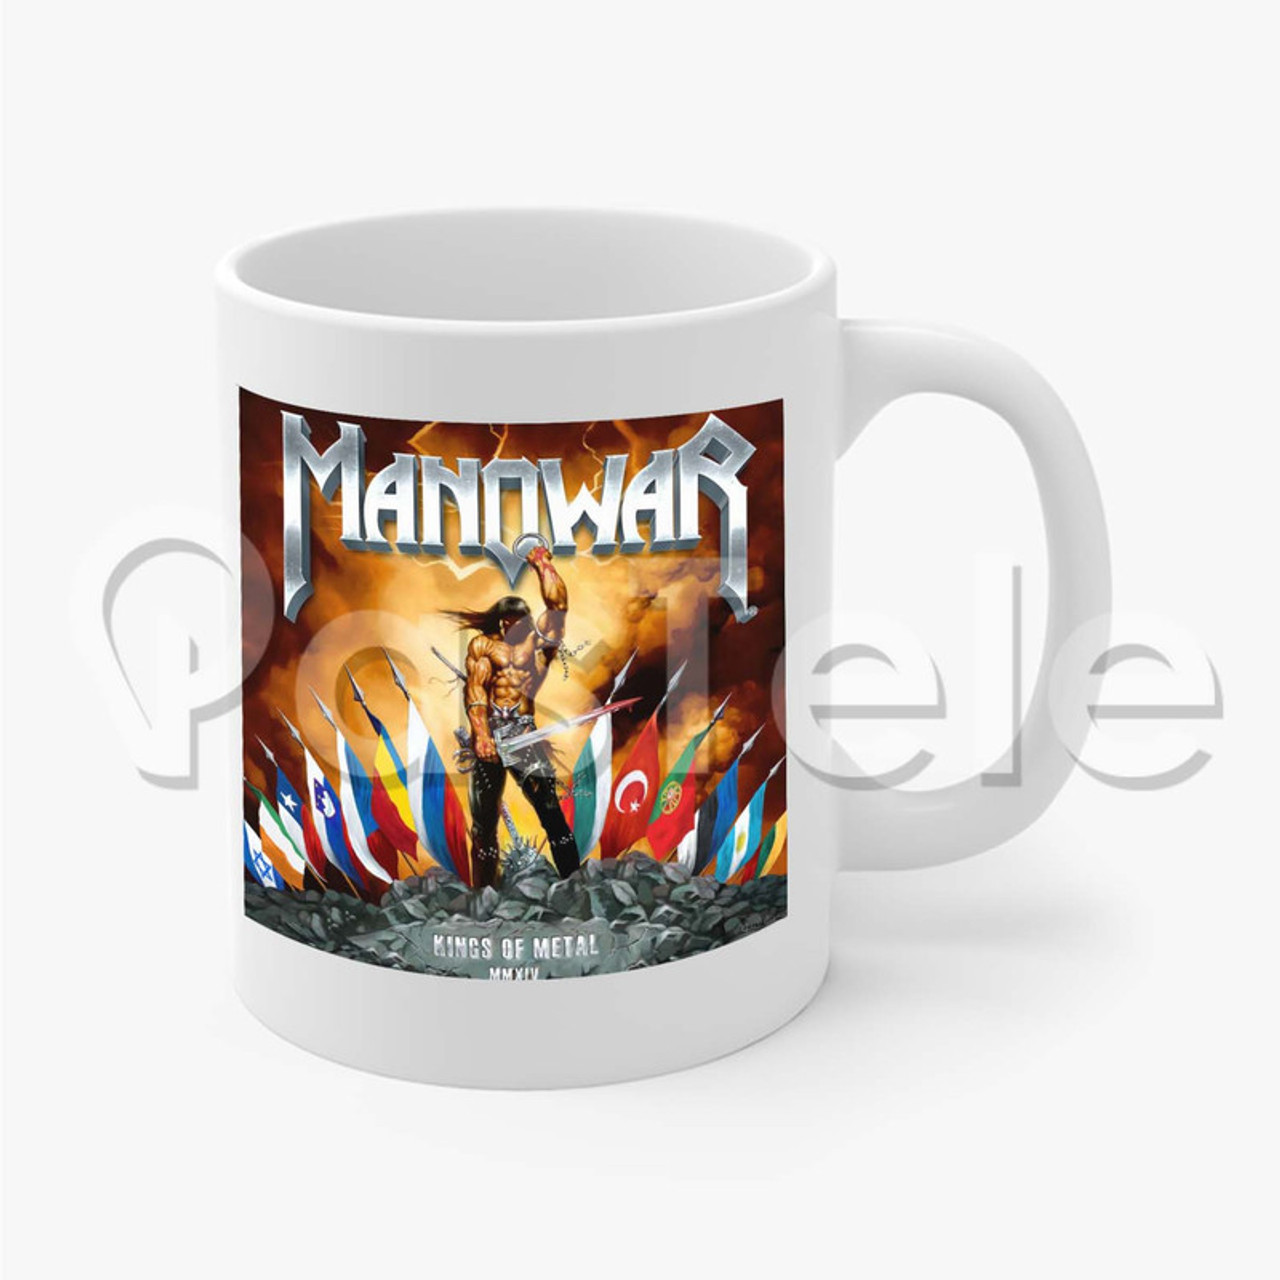 GRANDKIDS | Personalized Metal Coffee Mug